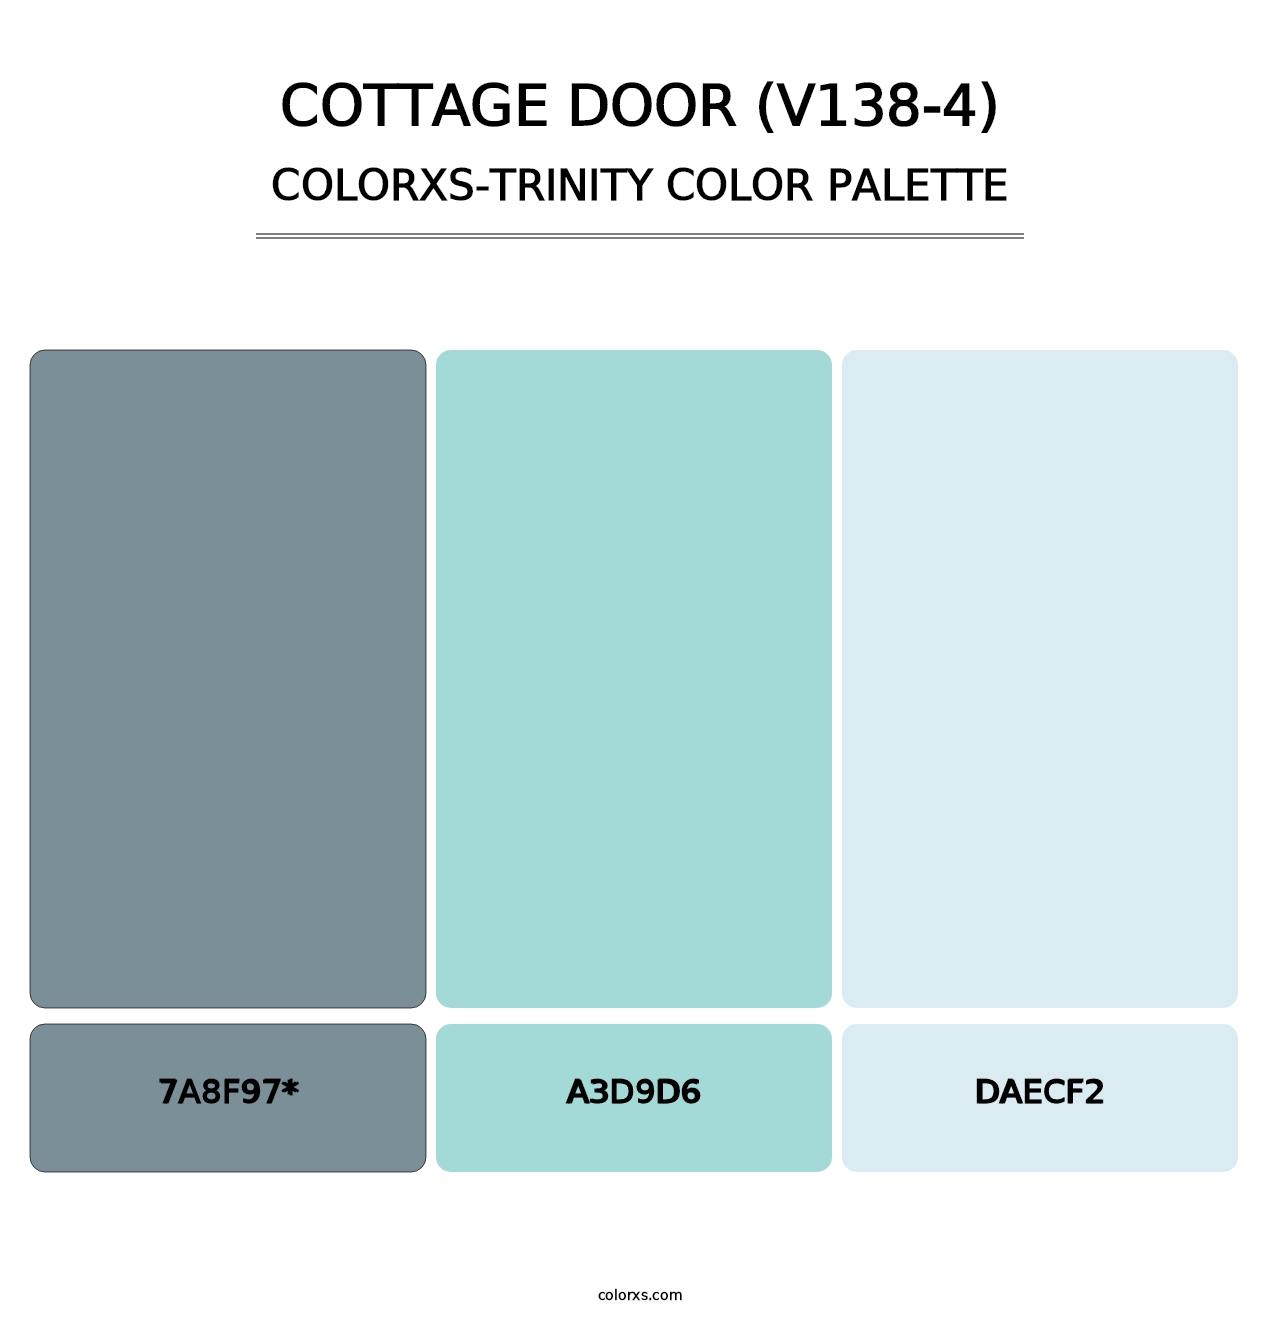 Cottage Door (V138-4) - Colorxs Trinity Palette